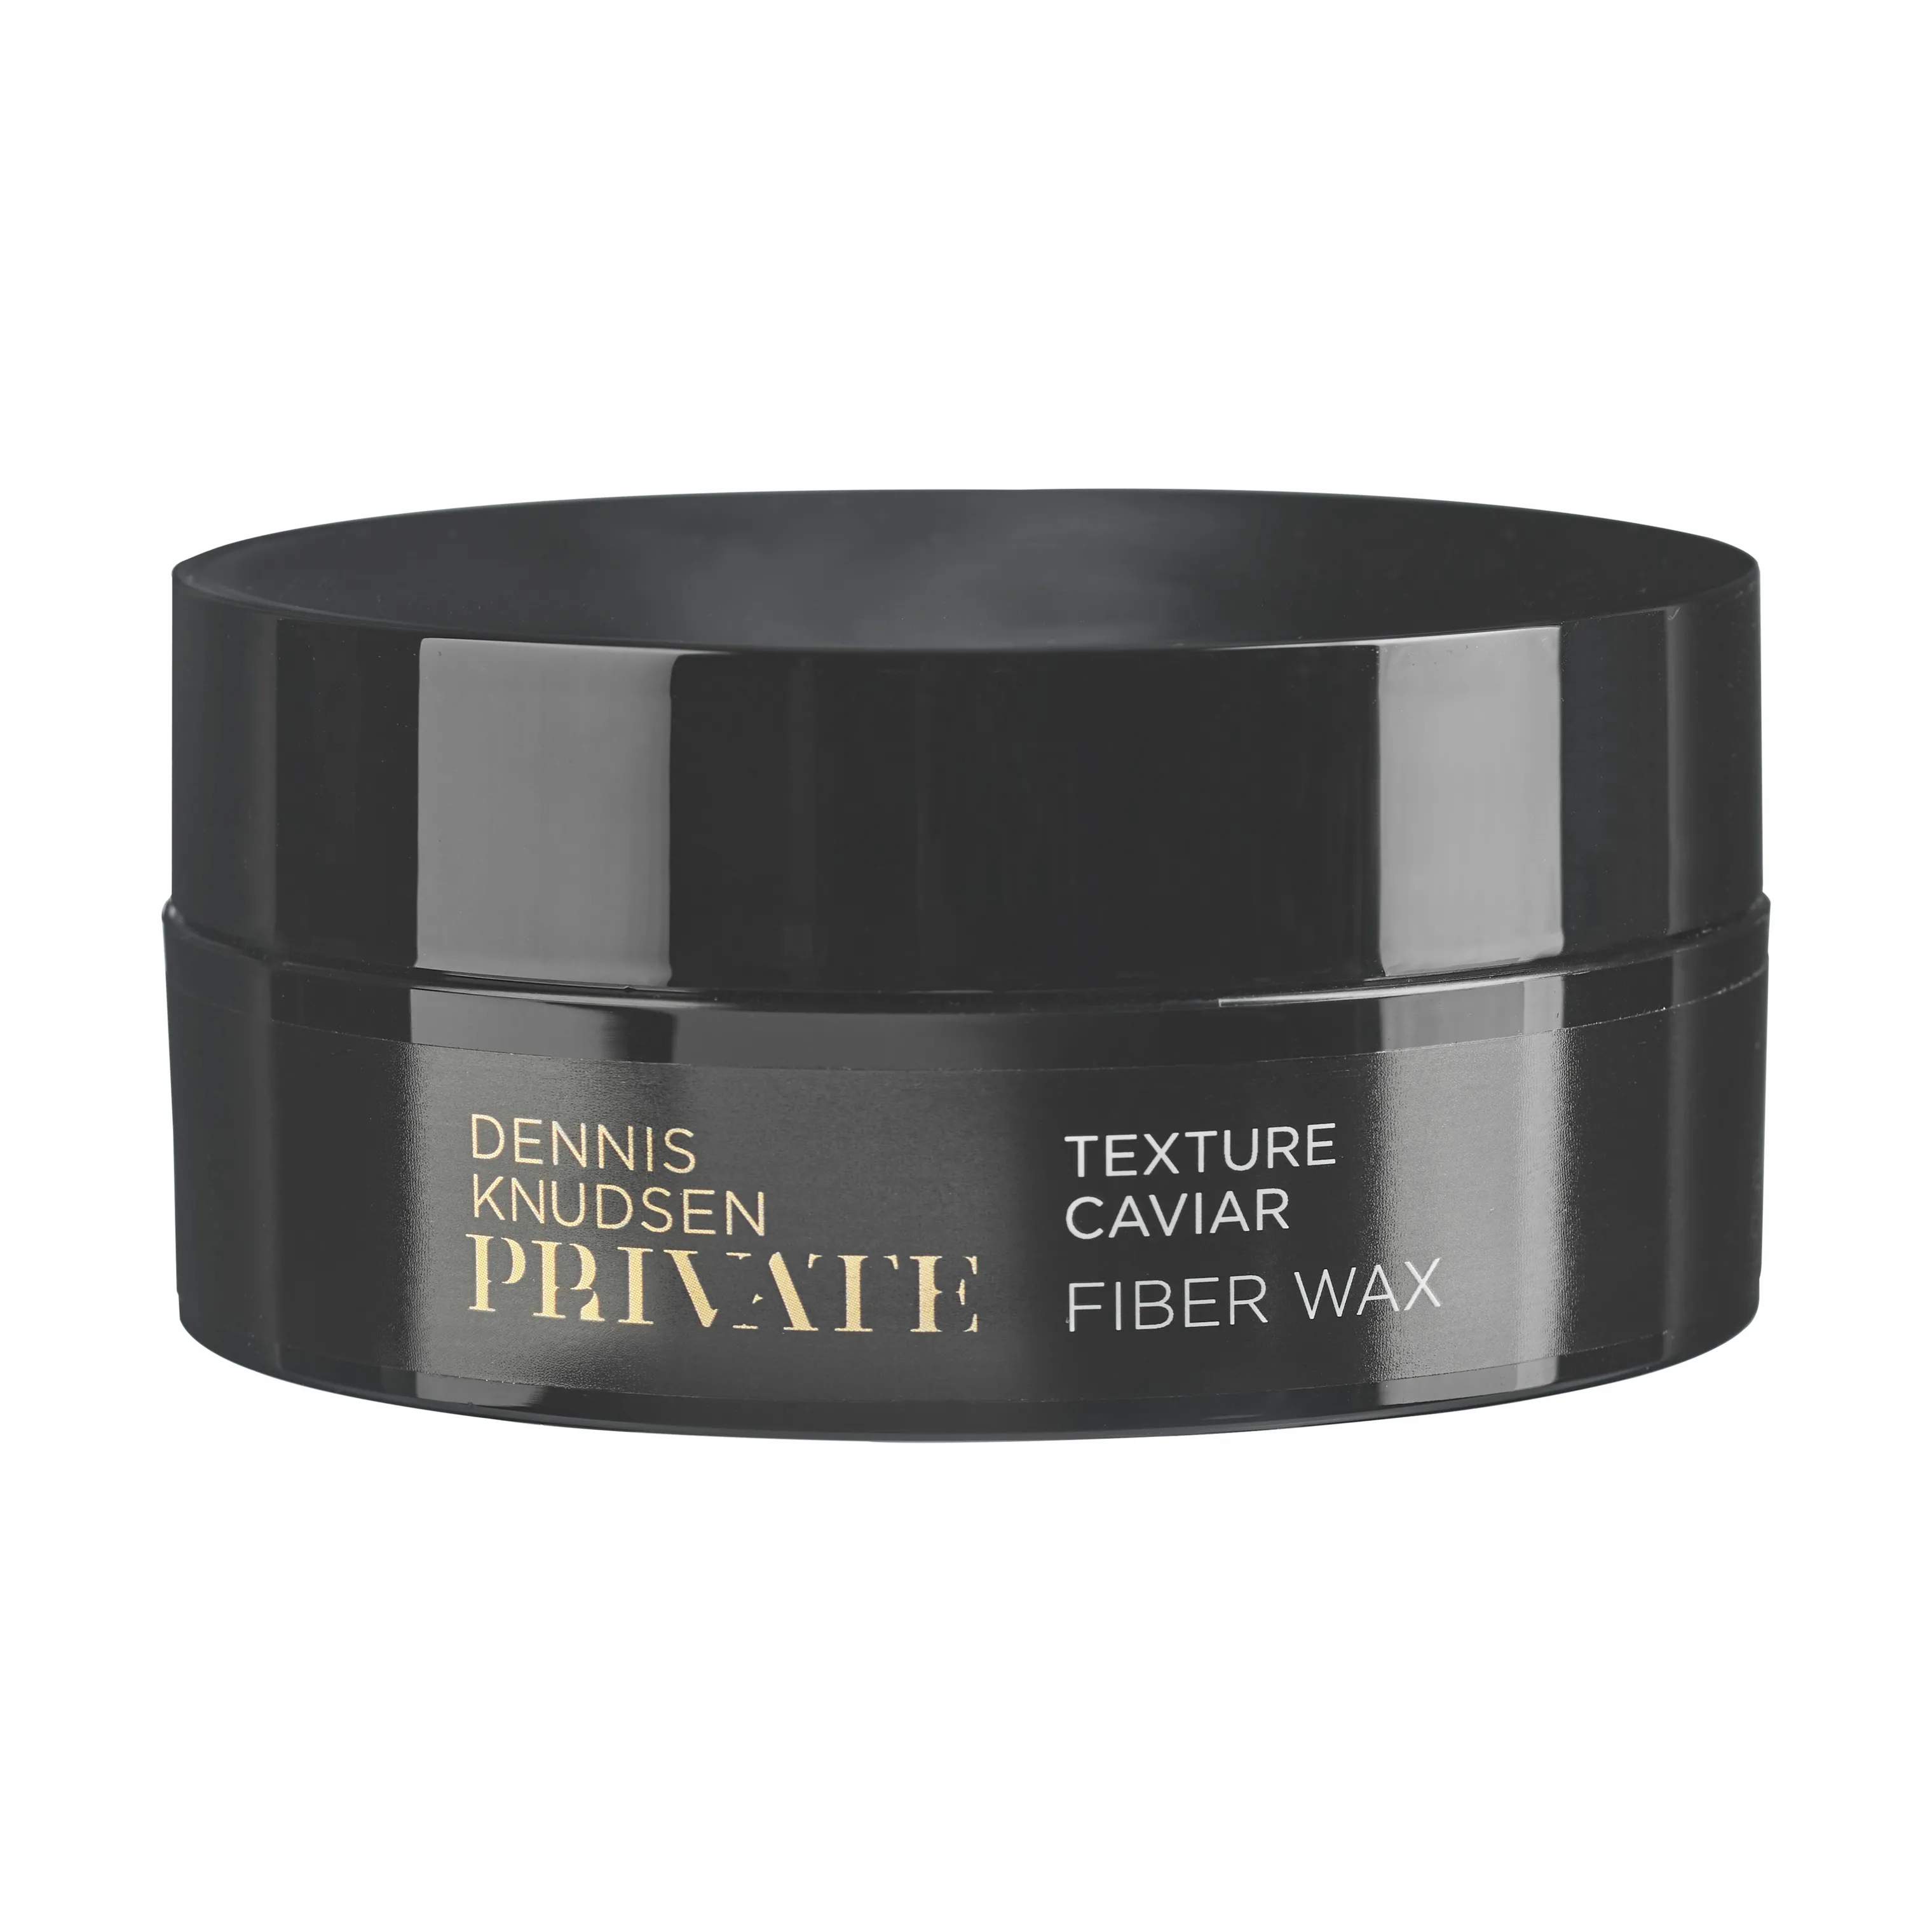 PRIVATE Texture Caviar Fiber Wax, sort, large